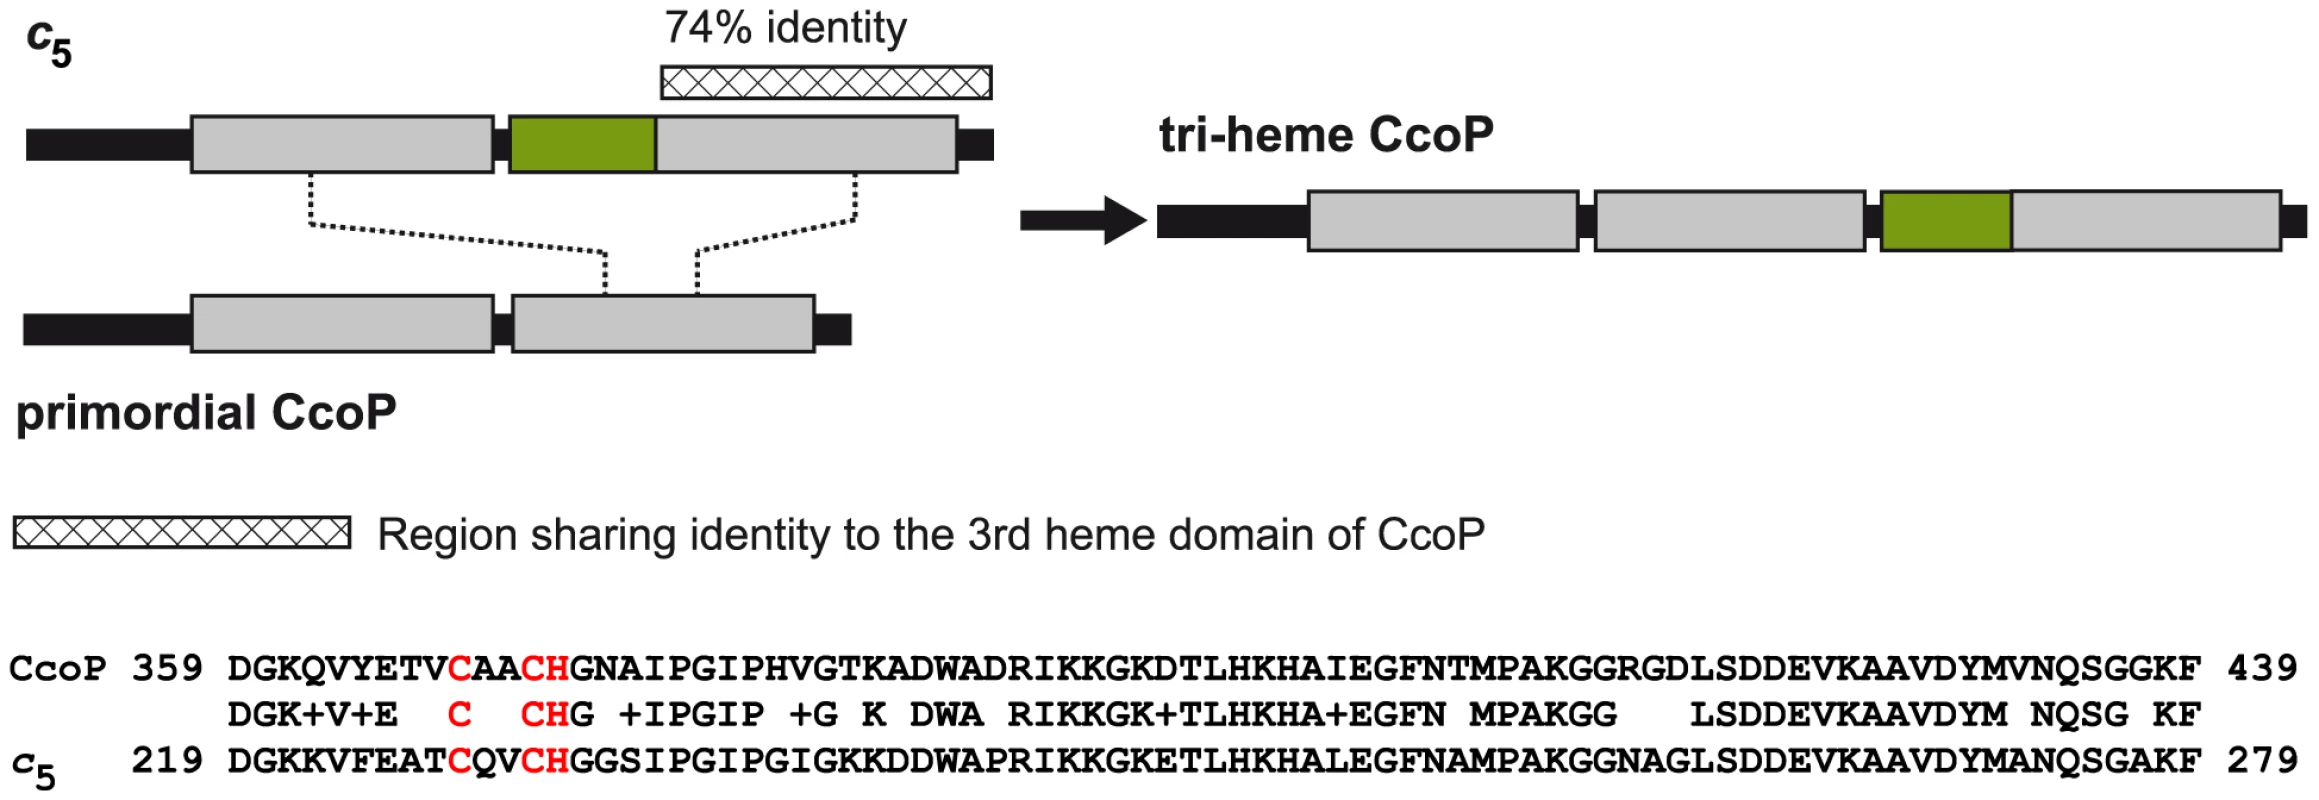 Model for the origin of the tri-heme CcoP in the genus <i>Neisseria</i>.